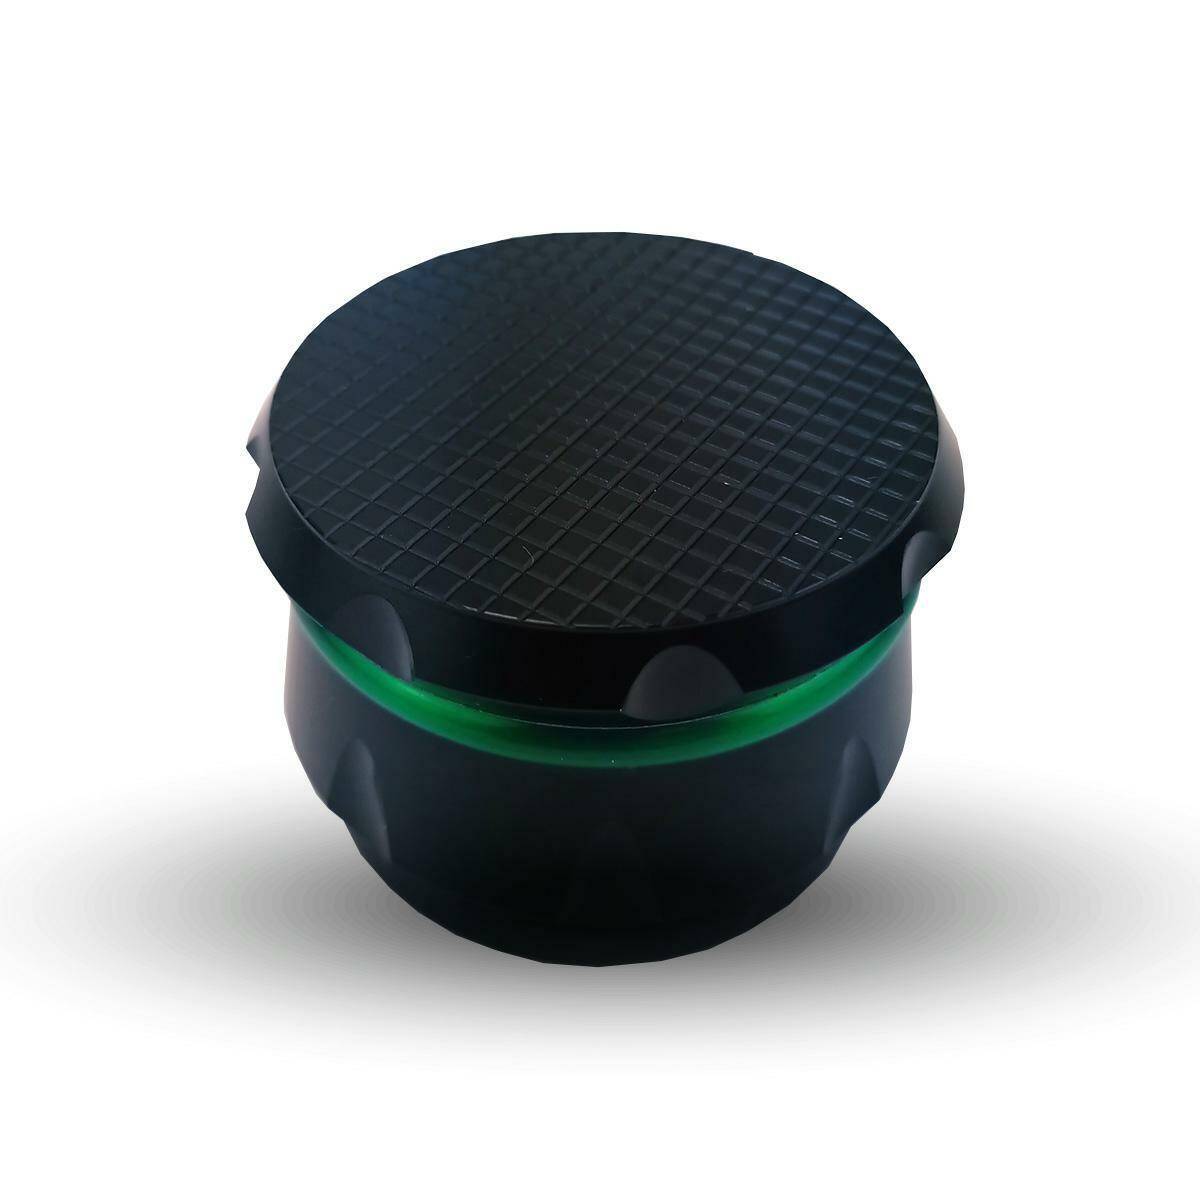 Tobacco grinder - Black, green ring (single box)